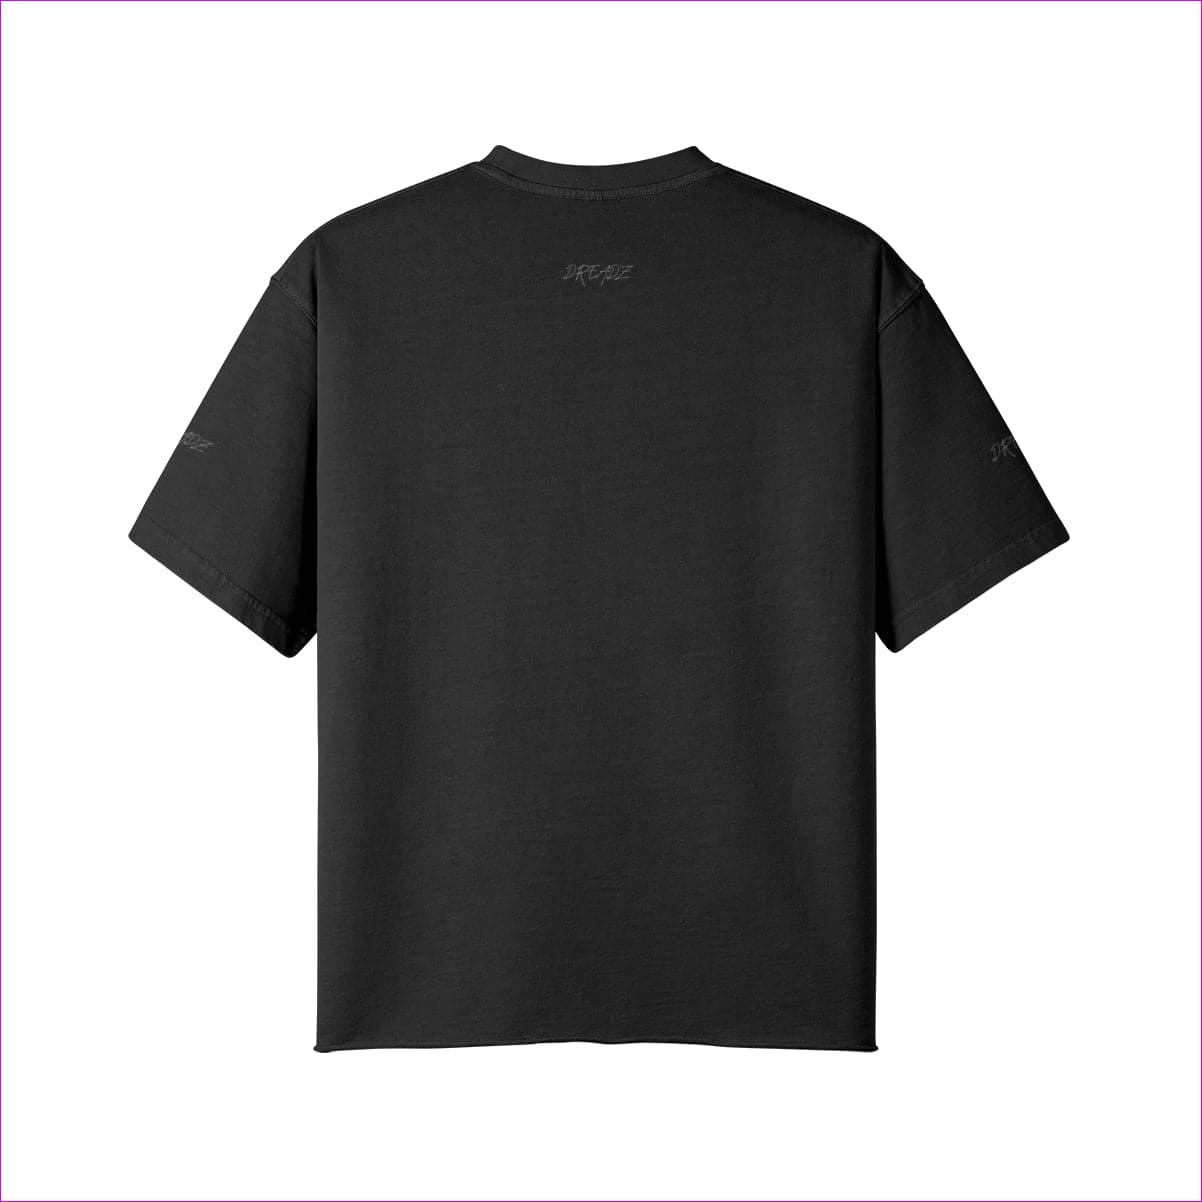 Naughty Dreadz Washed Raw Edge T-shirt - 8 colors - men's t-shirt at TFC&H Co.